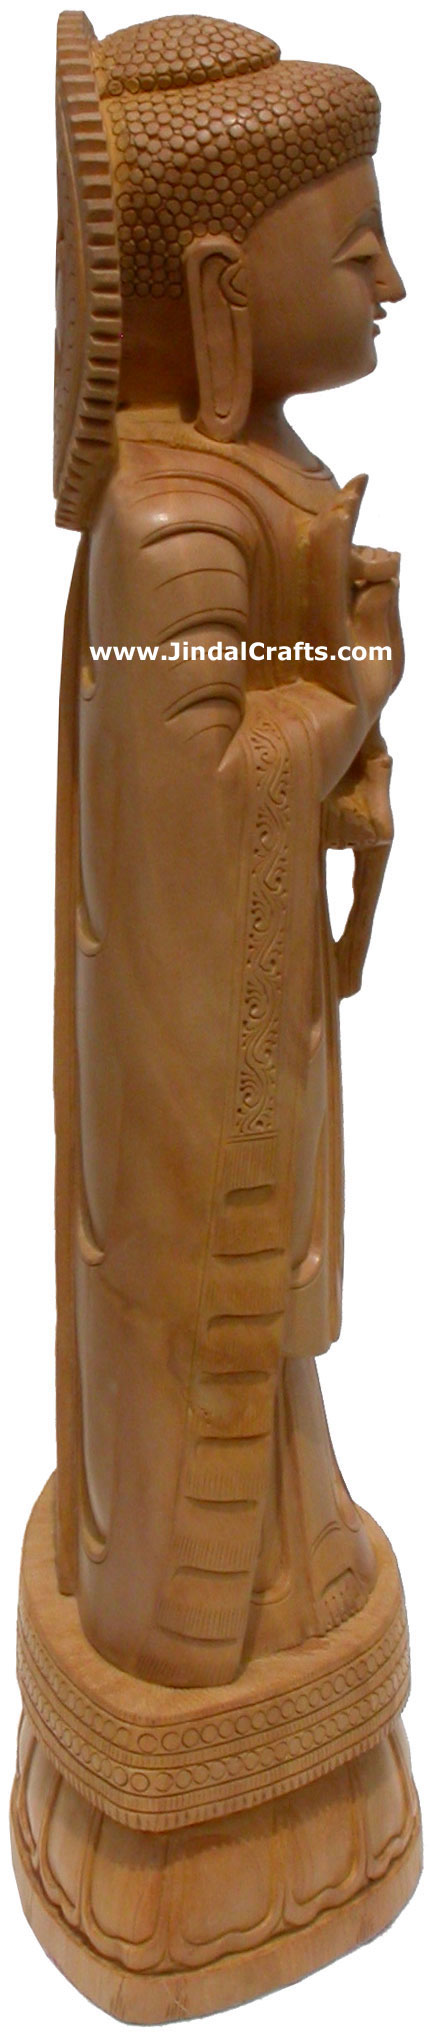 Masterpiece - Hand Carved Wooden Buddha Sculpture Indian Statue Art Tibetan Arts